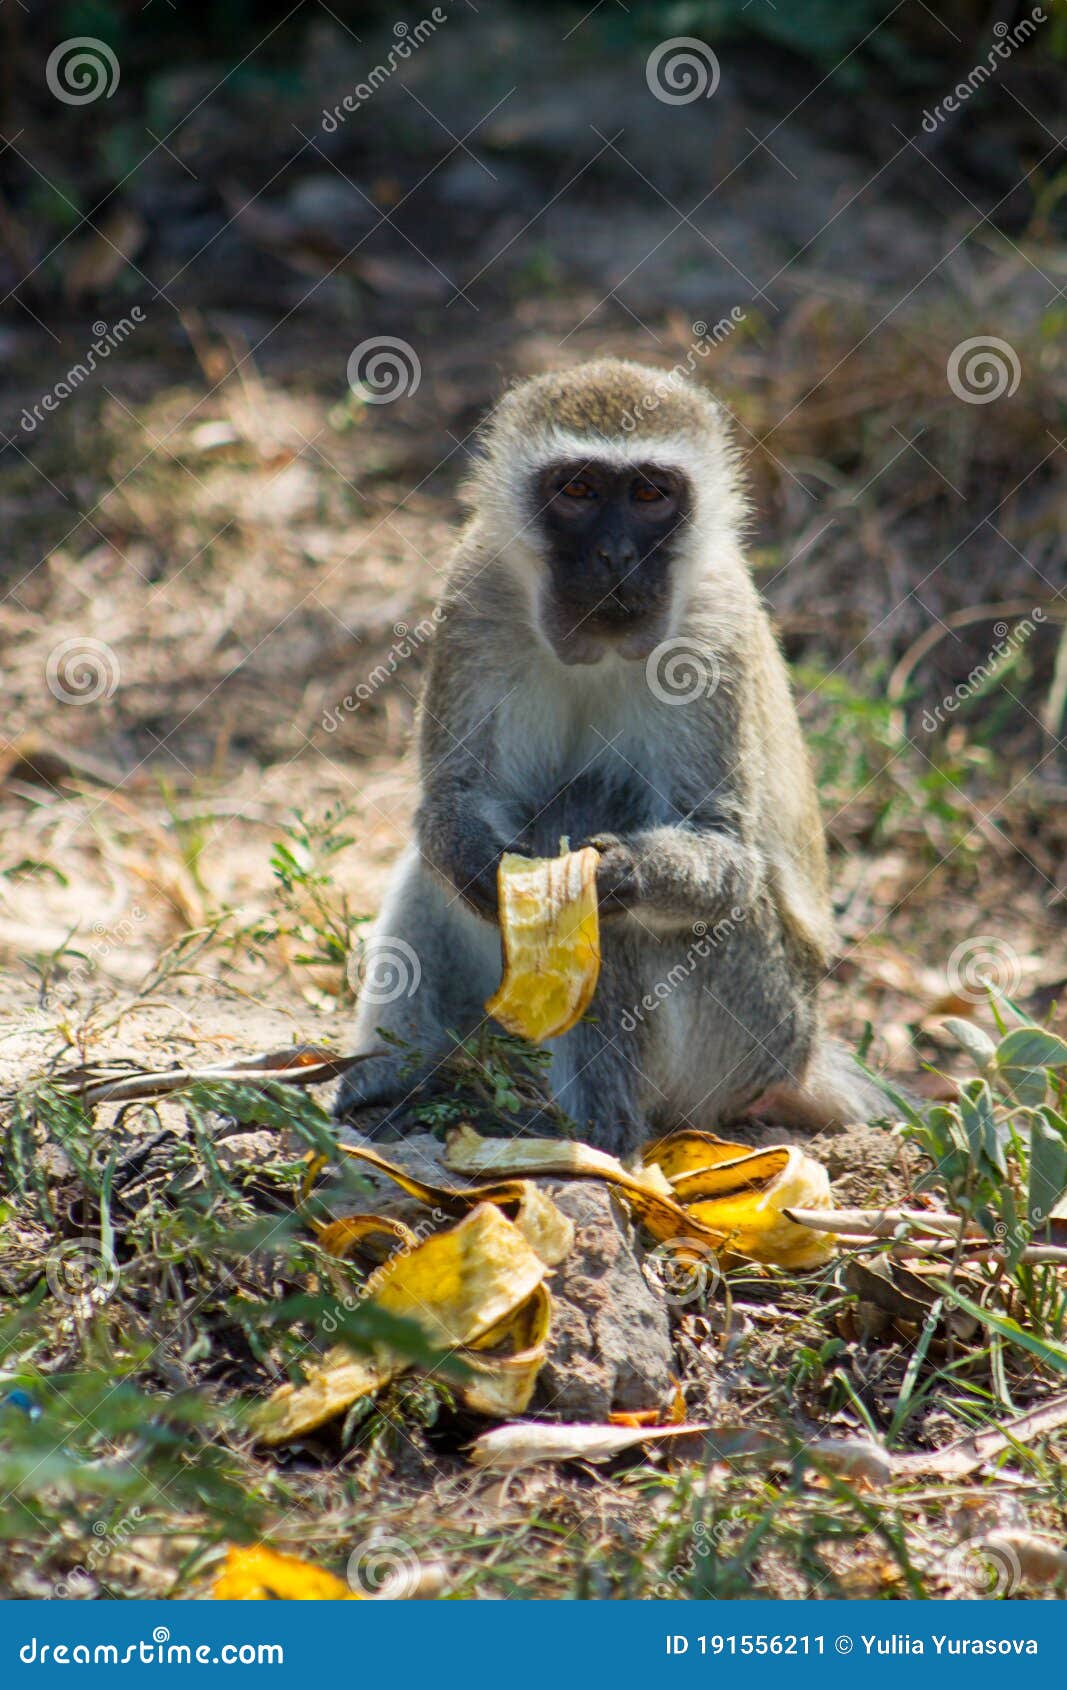 monkey marmoset in africa eating banana